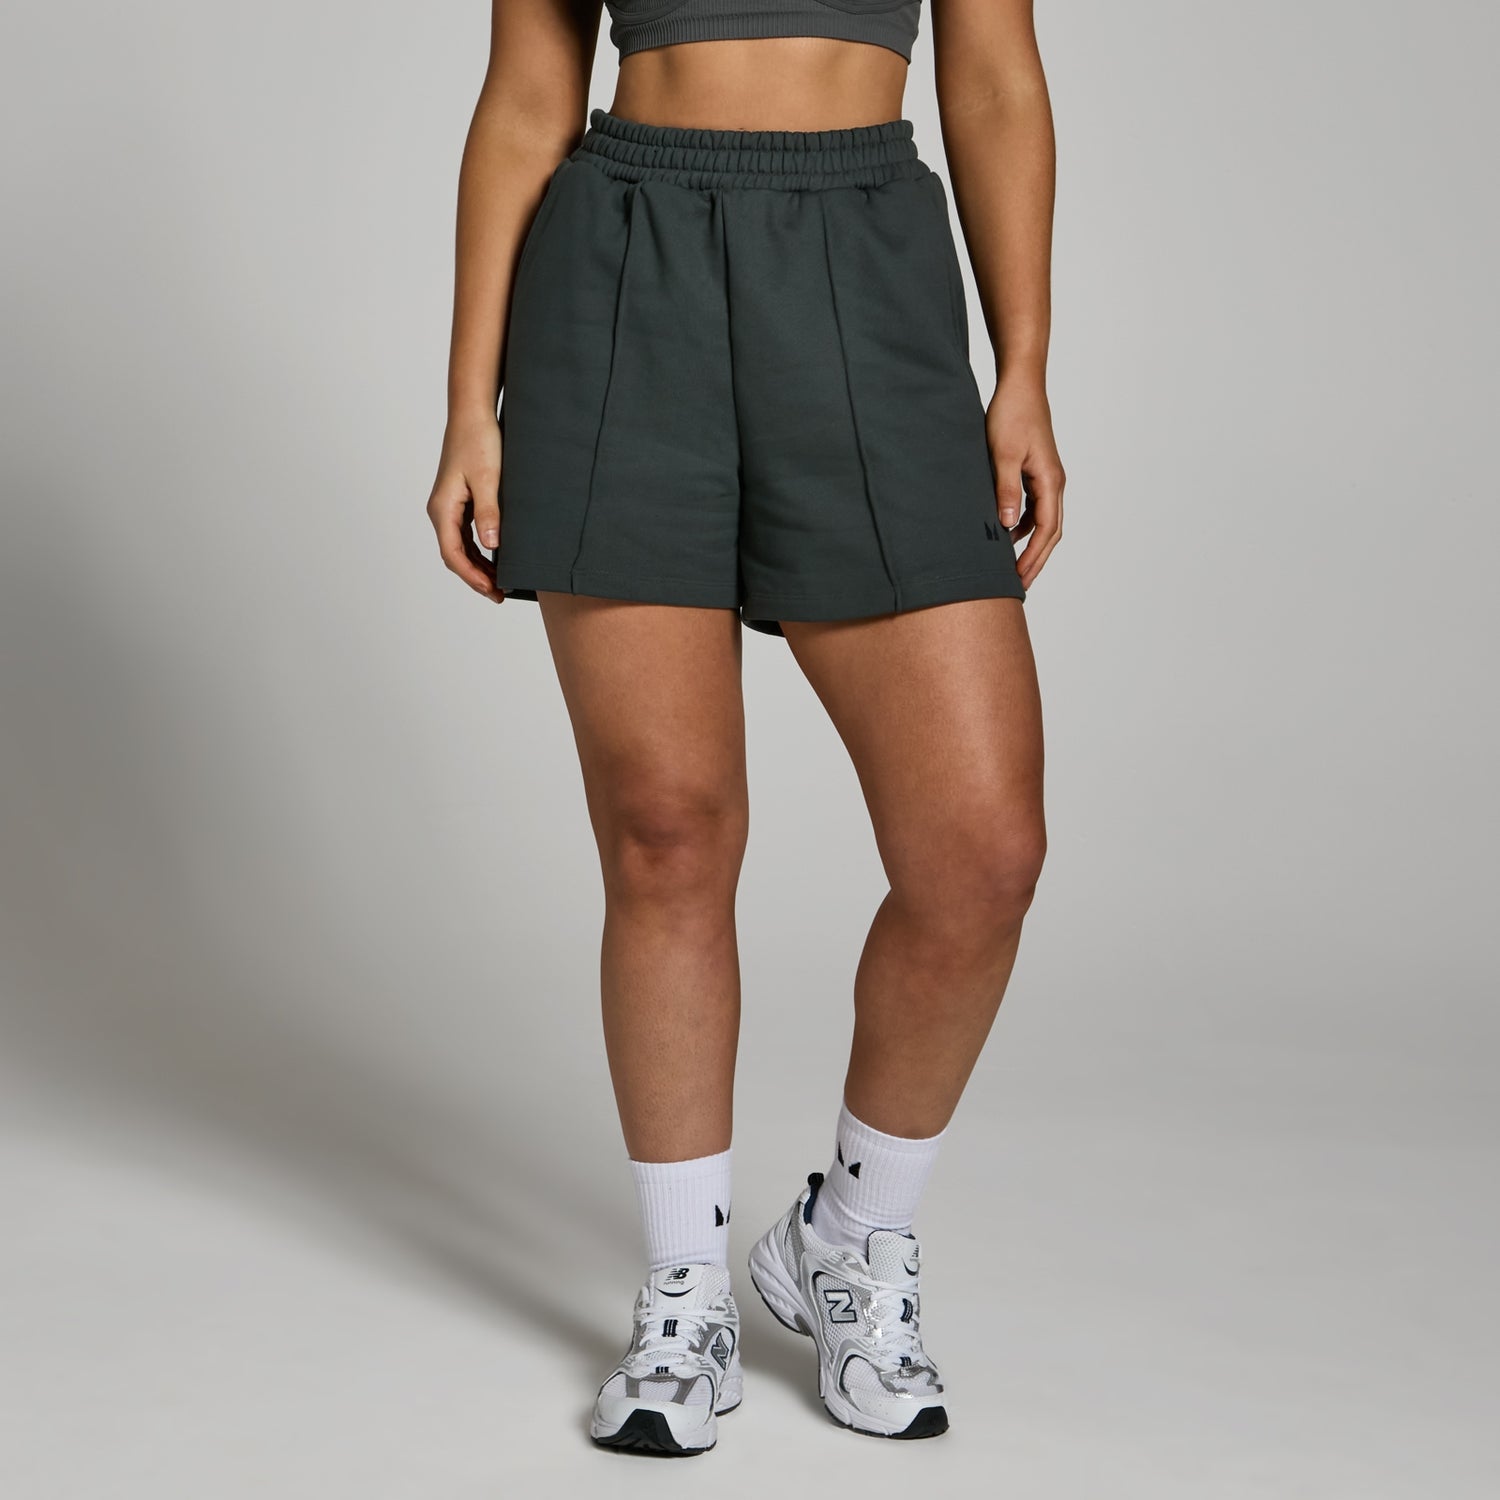 Lifestyle生活方式系列女士短款运动短裤 - 暗影  - XS